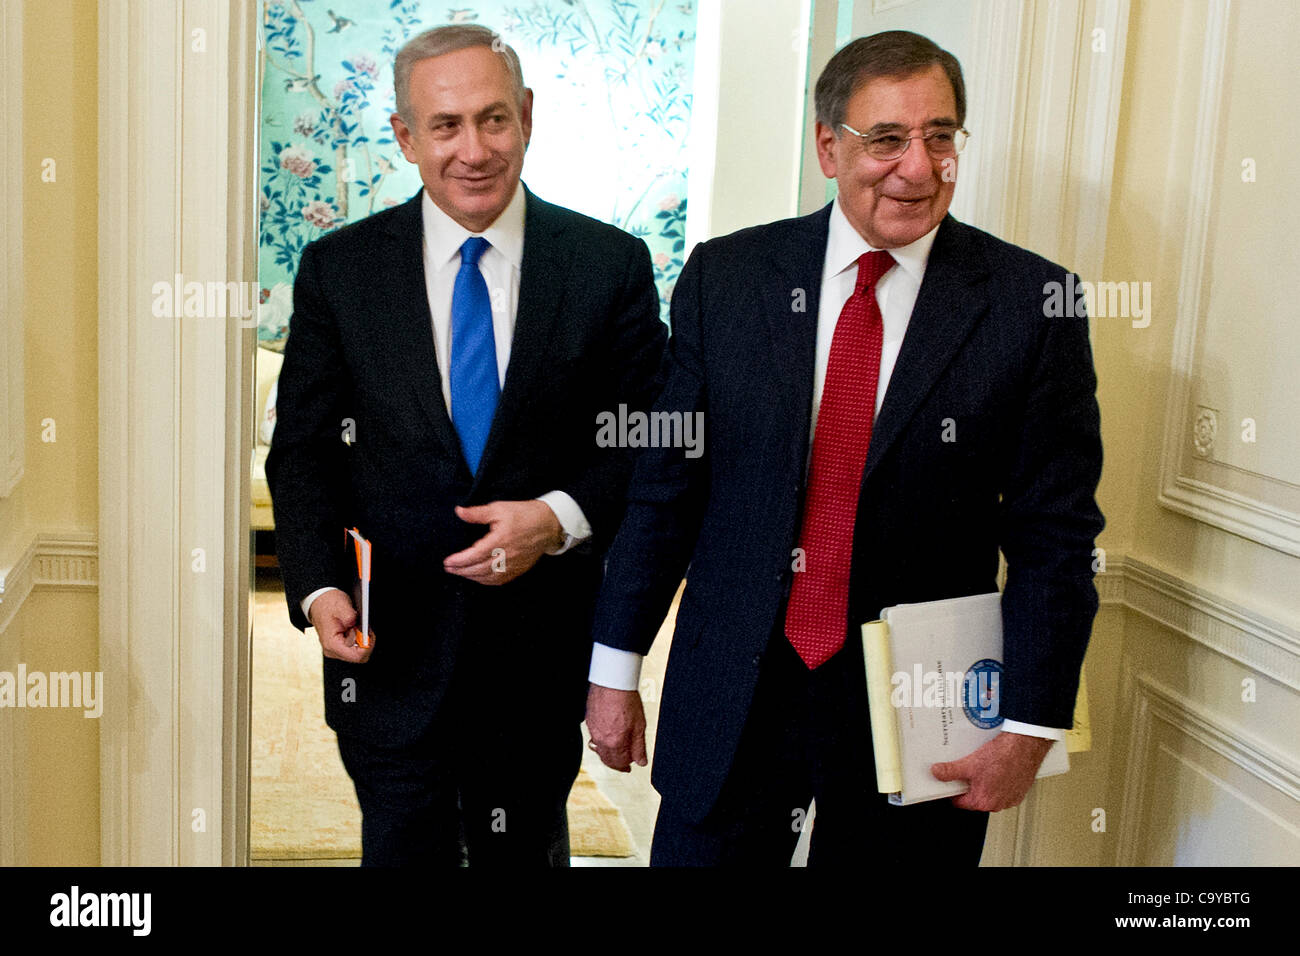 Defense Secretary Leon E. Panetta with Israeli Prime Minister Benjamin Netanyahu after their meeting at Blair House, Washington, D.C., March 5, 2012. Stock Photo